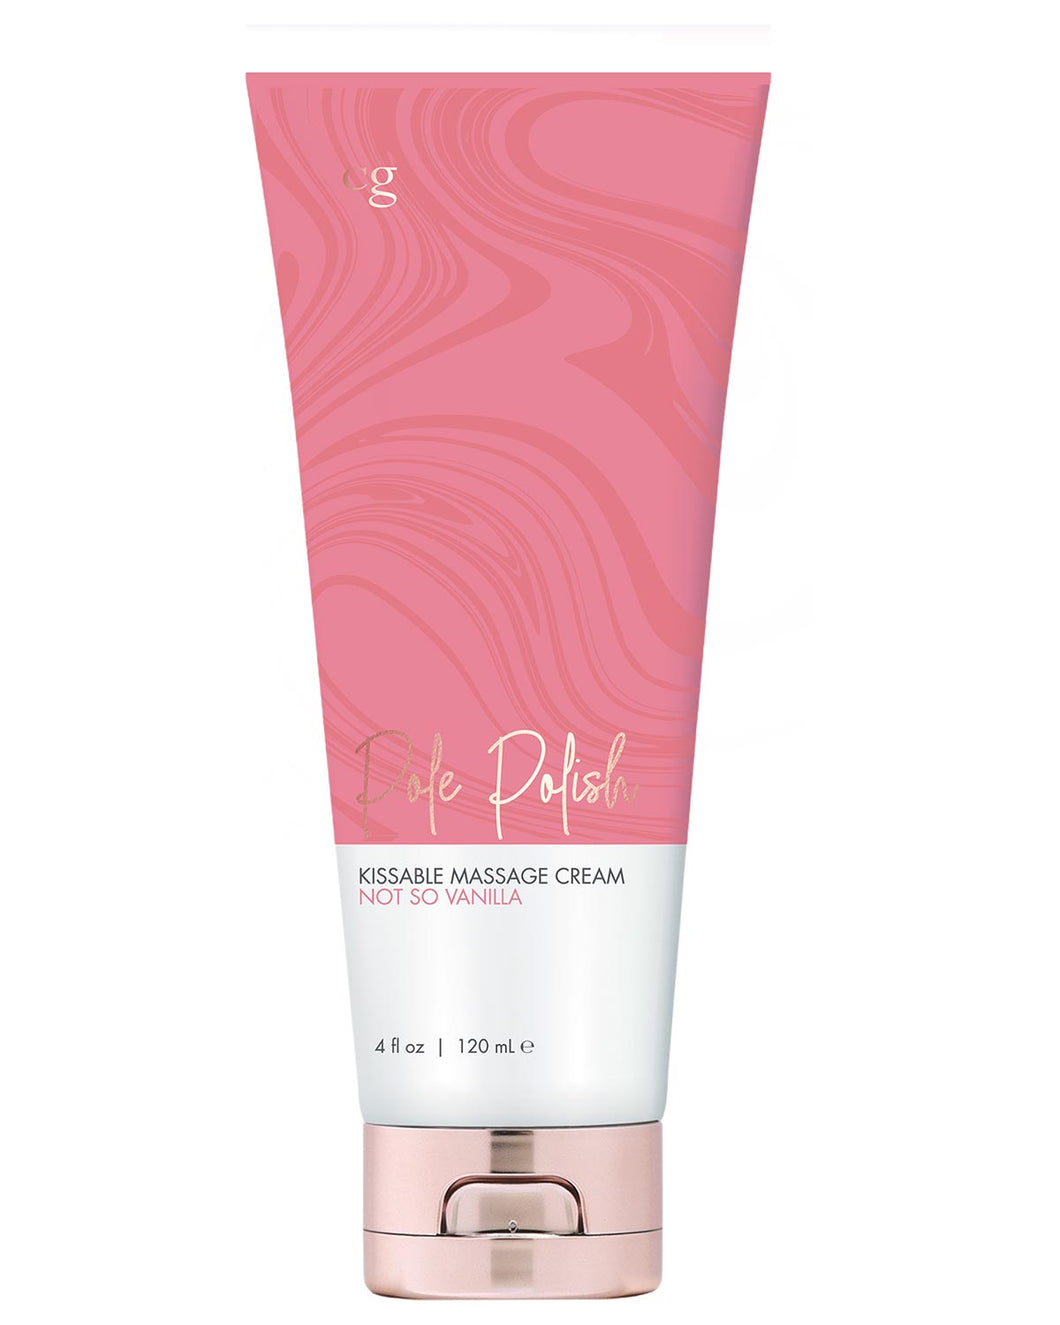 CG Brand POLE POLISH Kissable Massage Cream